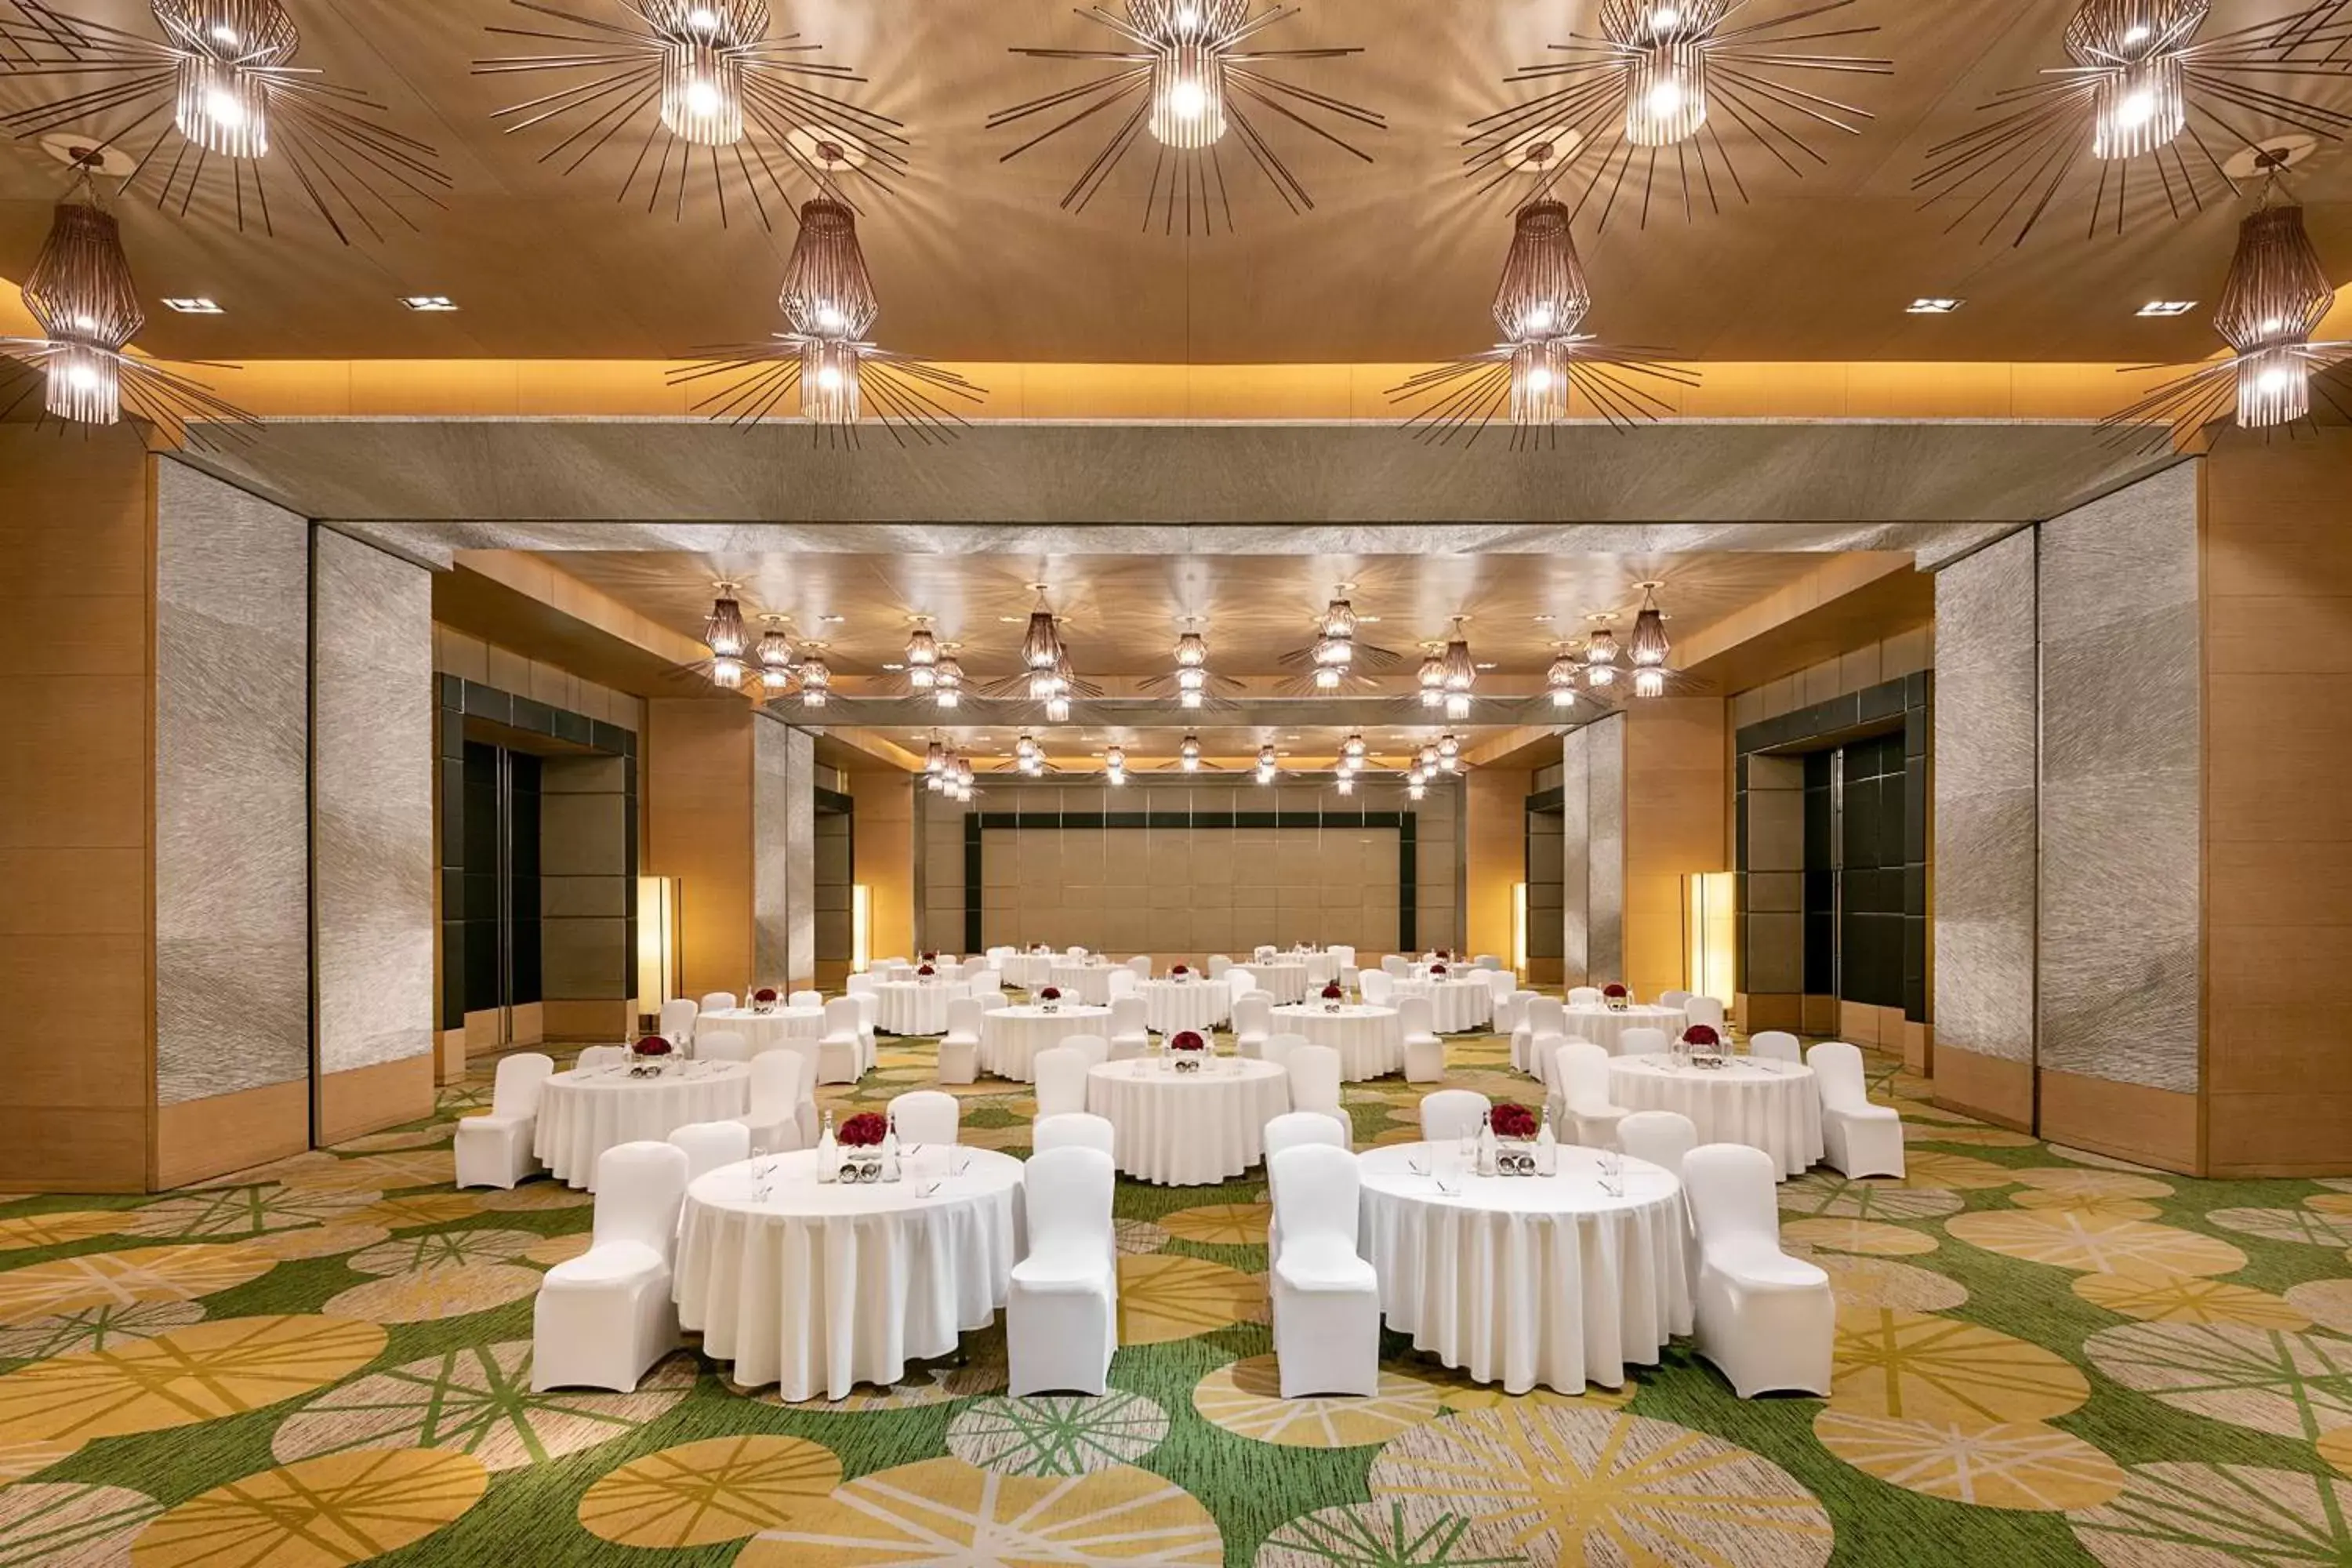 On site, Banquet Facilities in Radisson Blu Hotel Amritsar